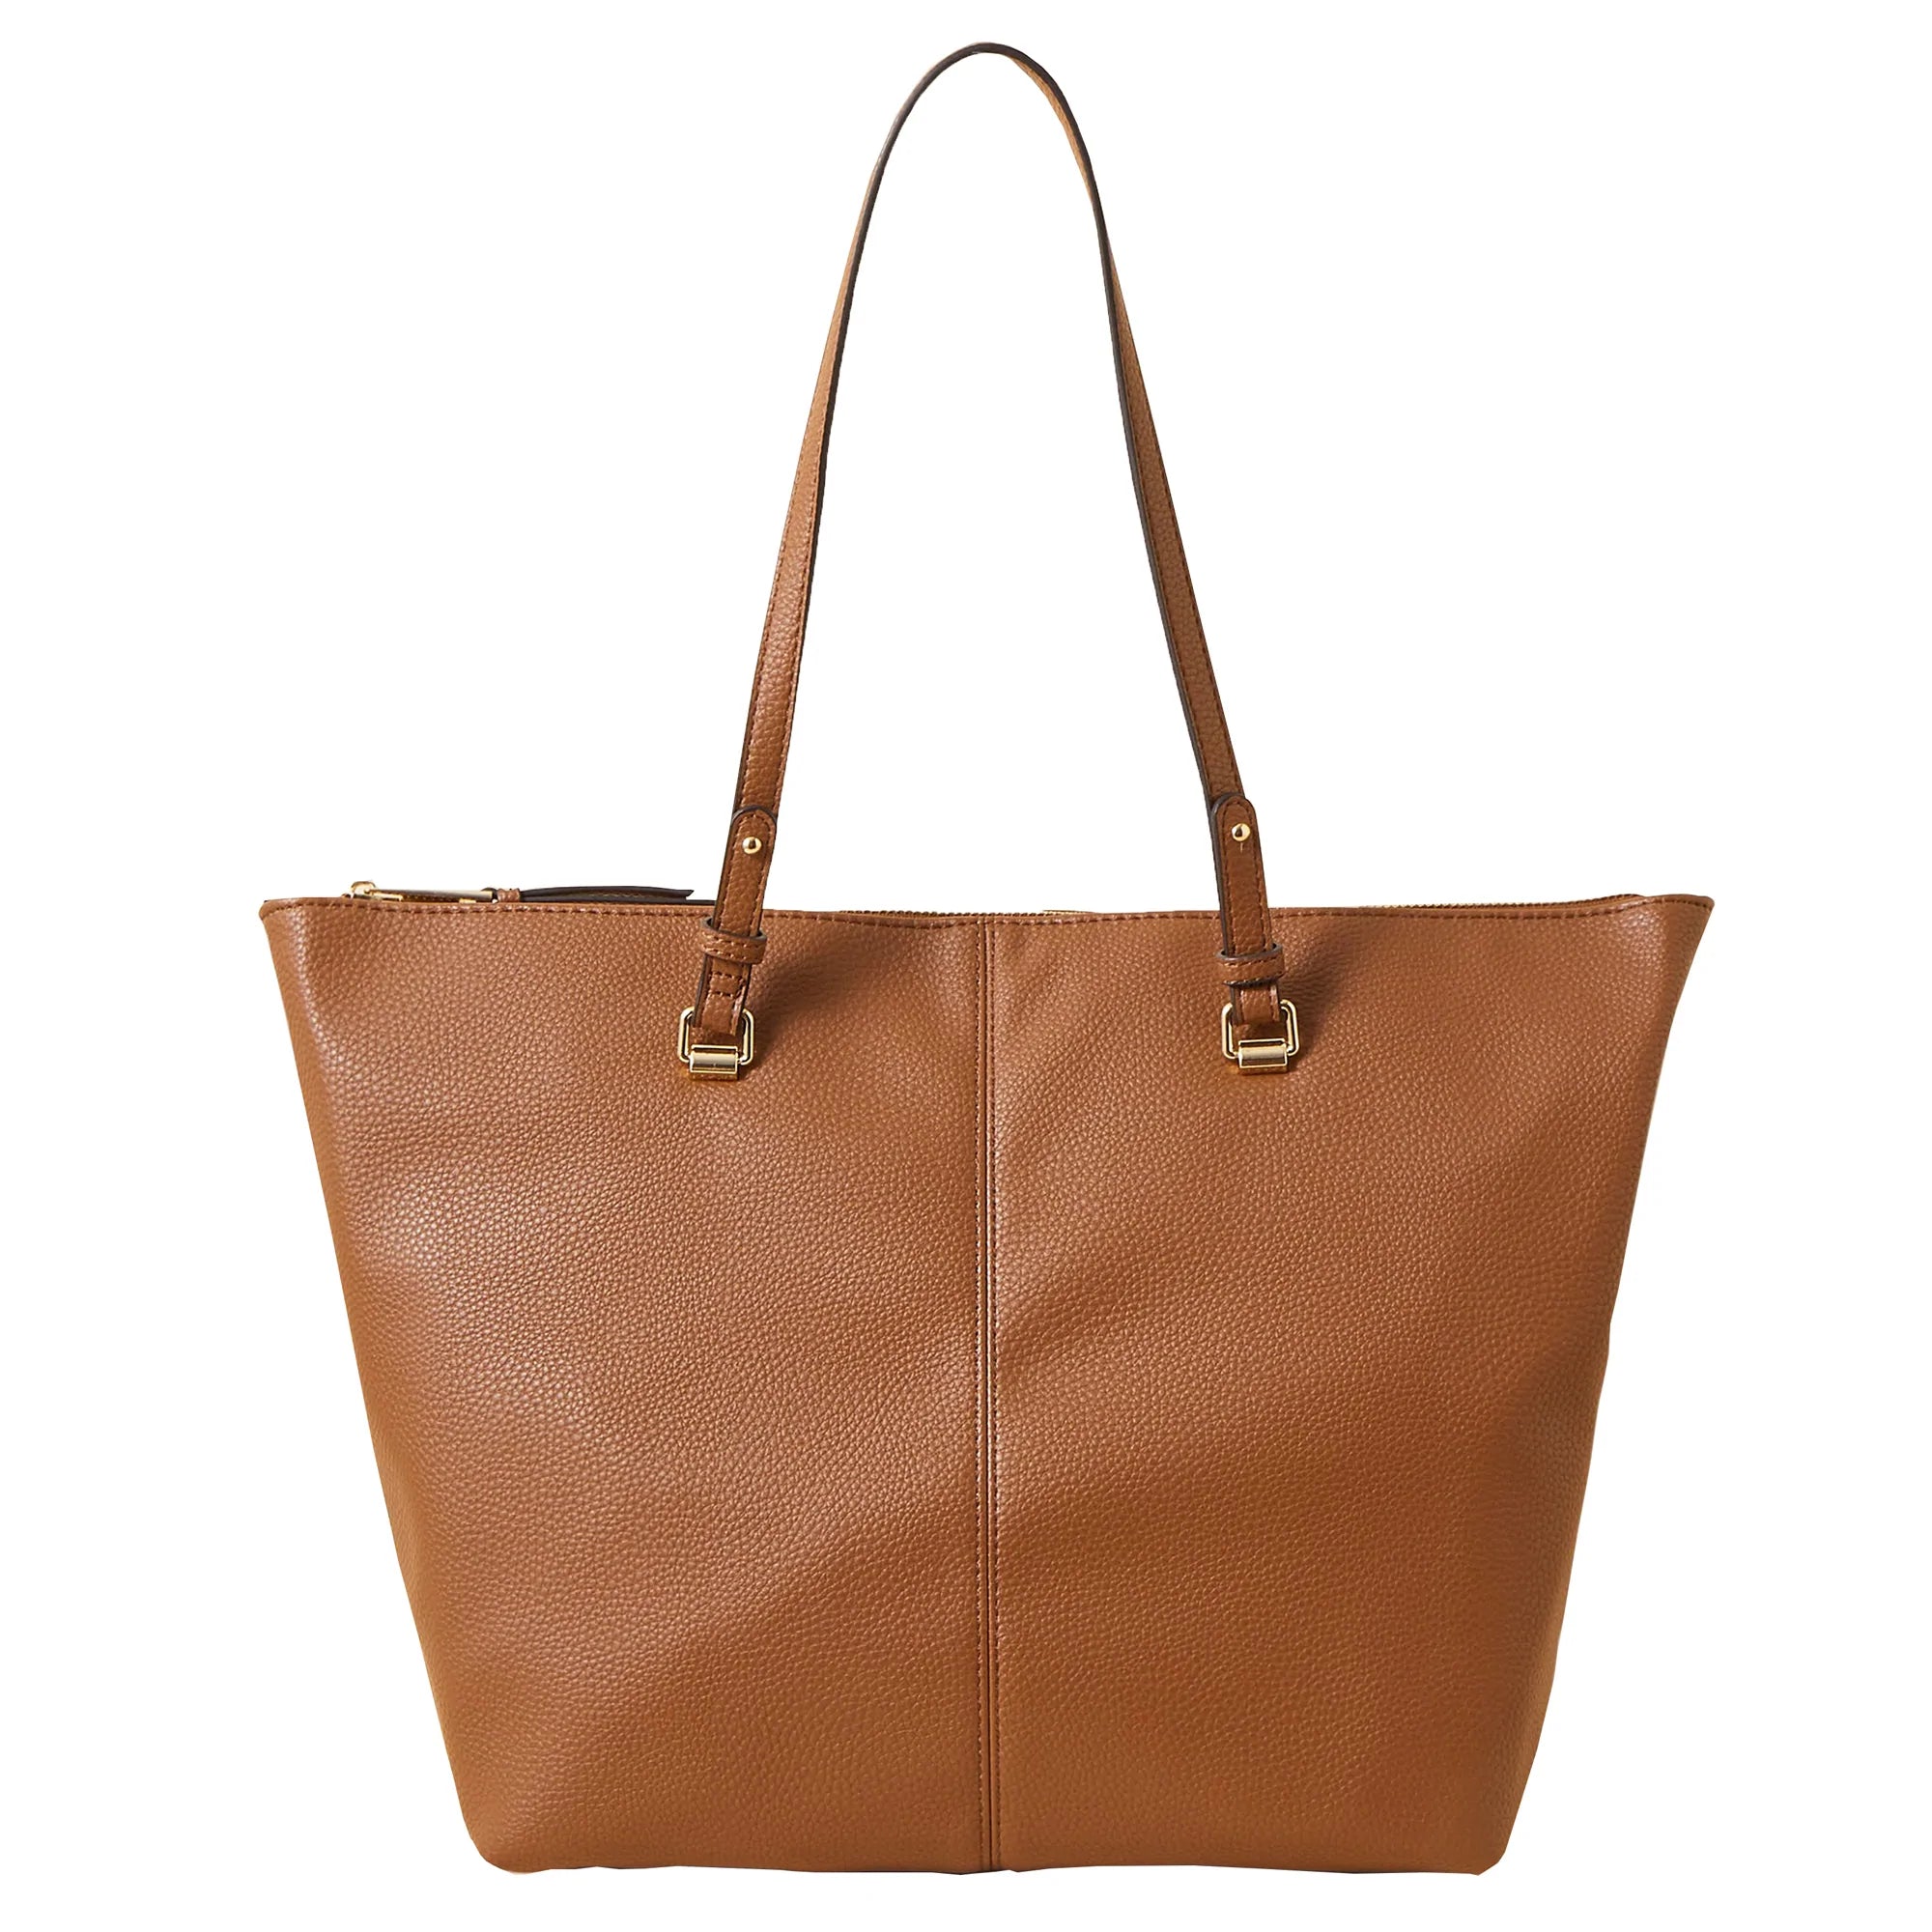 Buy Tan Talia Large Twistlock bag Online - Accessorize India